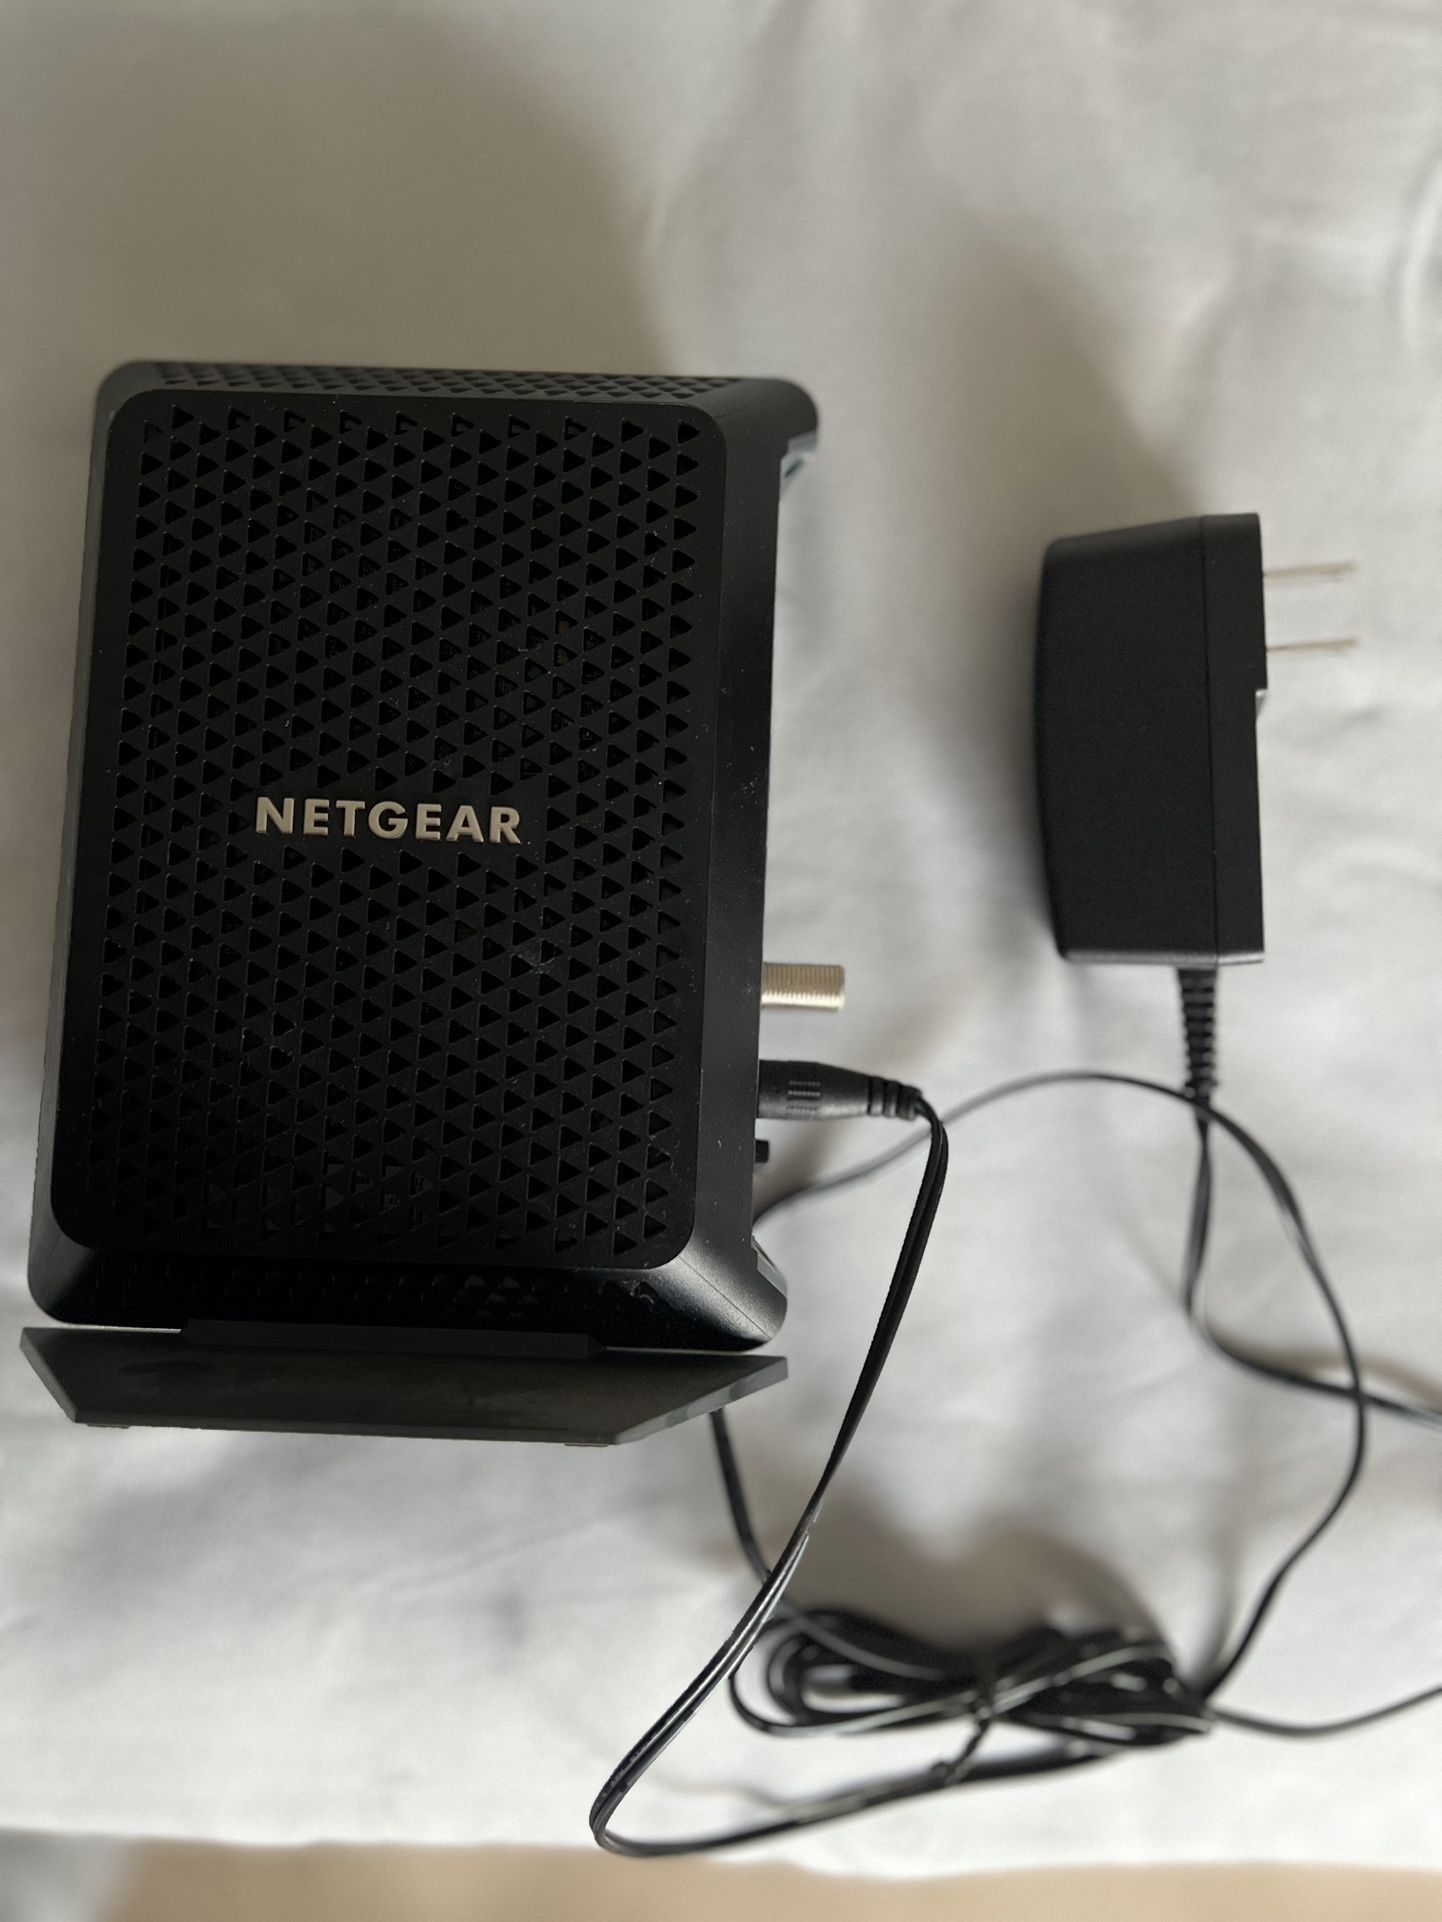 NETGEAR Internet modem (cable Modem:CM700)